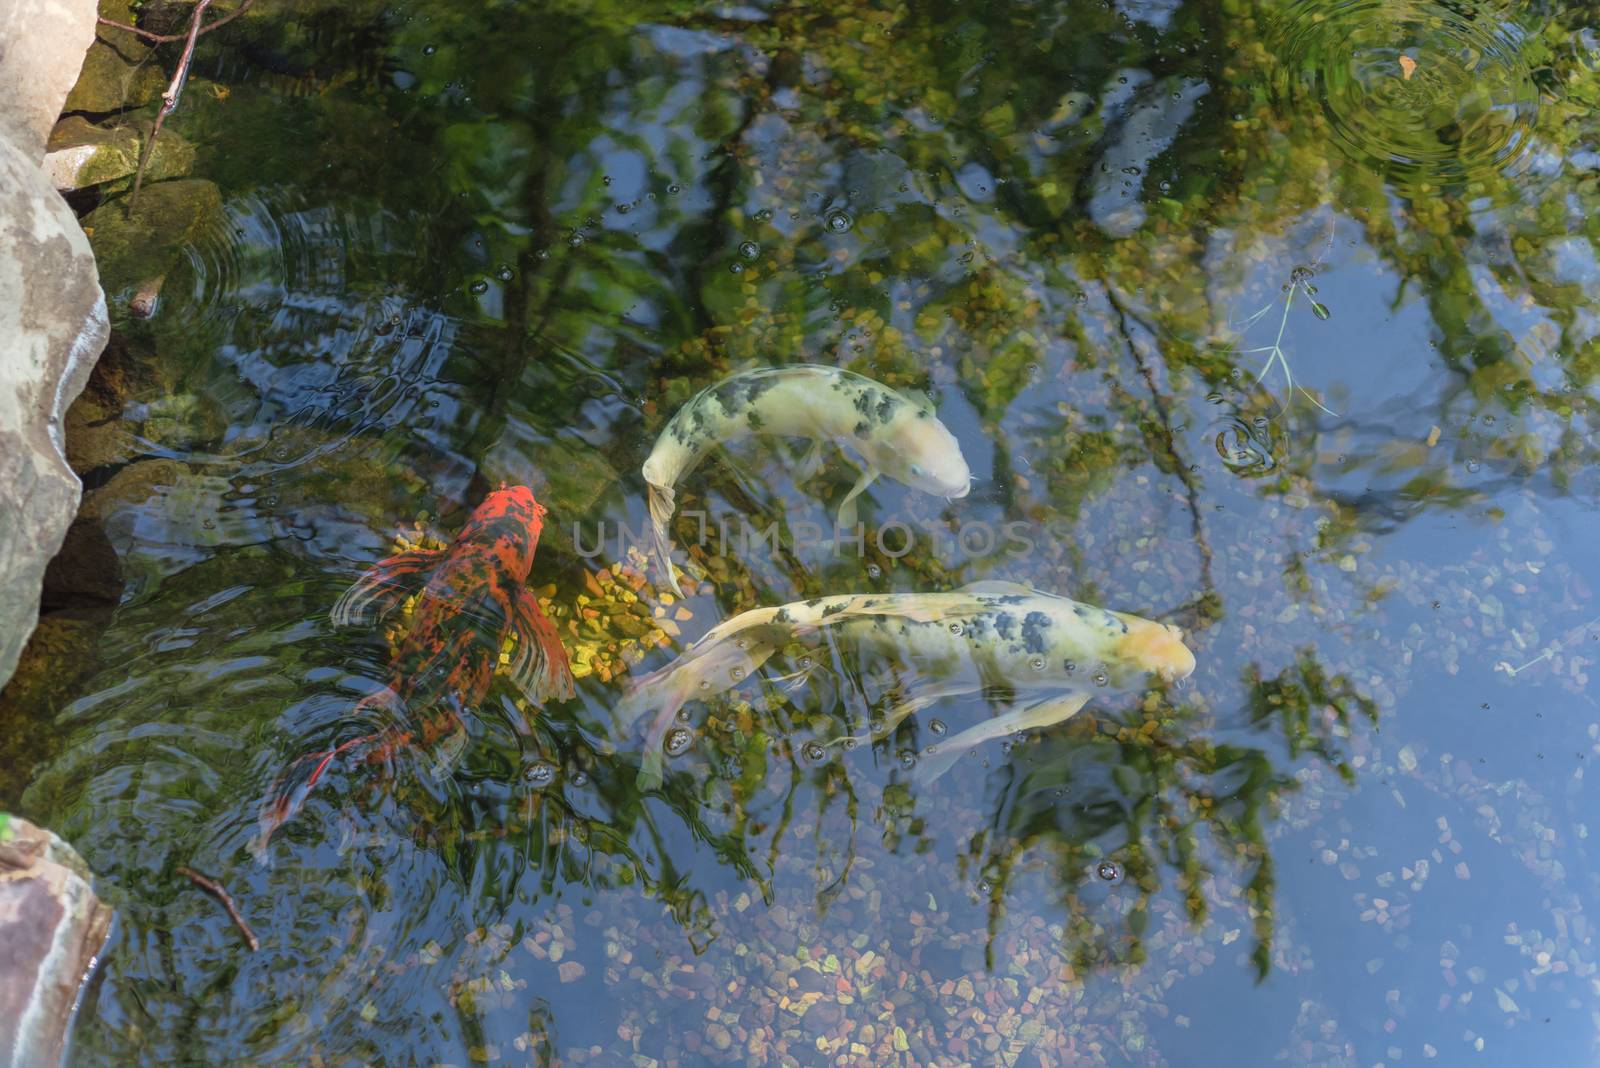 Three koi fish swimming in landscaping pond or water garden near Dallas, Texas, America